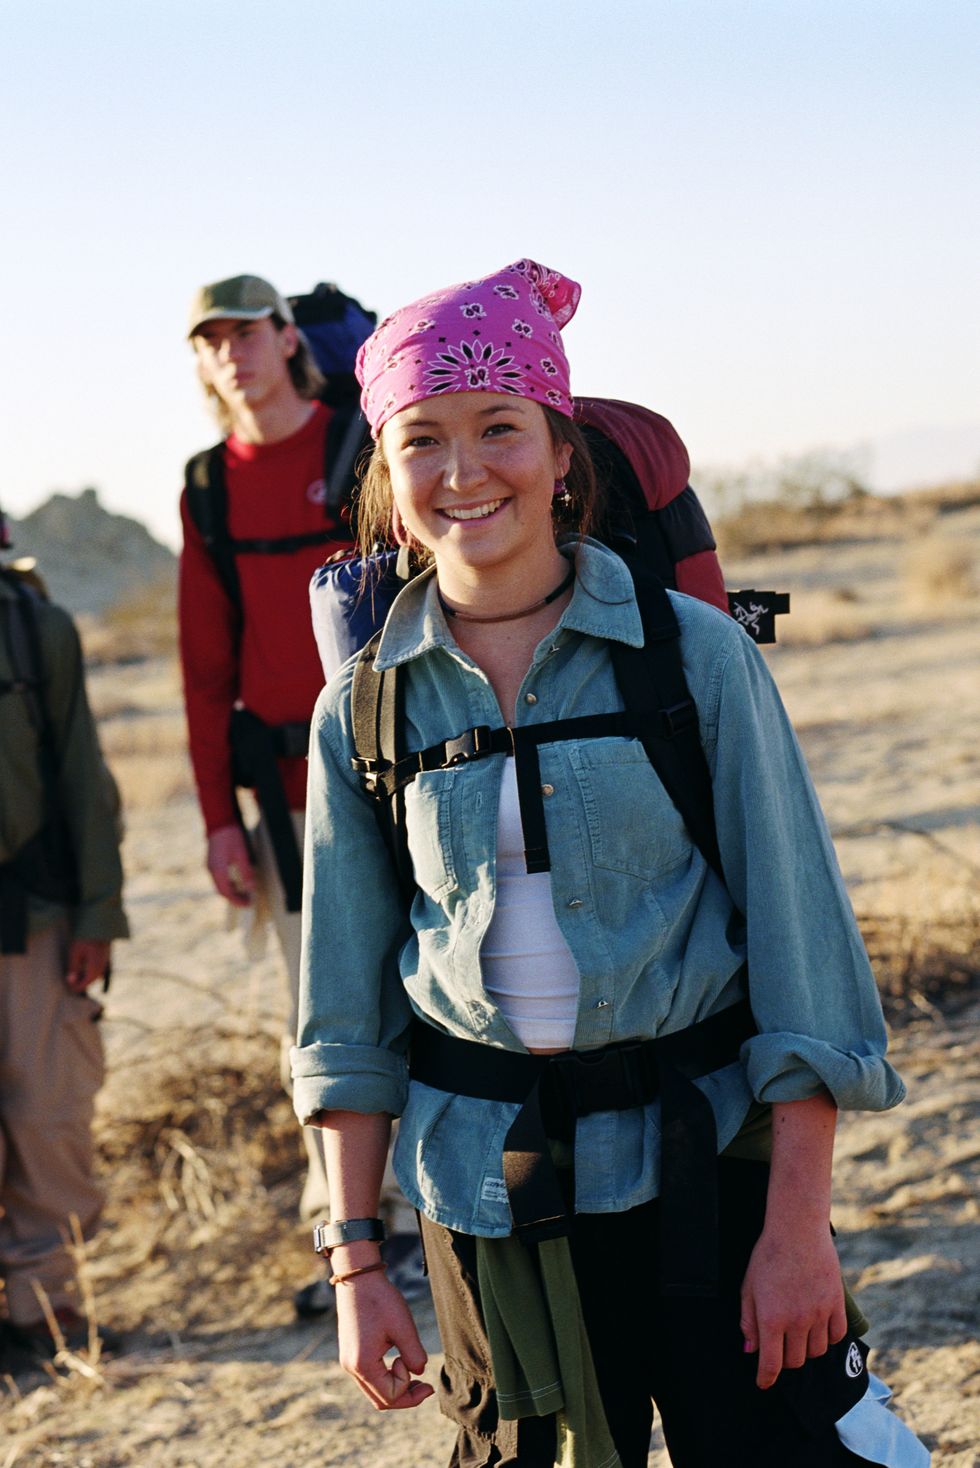 Teenage girl (16-18) wearing backpack in desert with friends, portrait